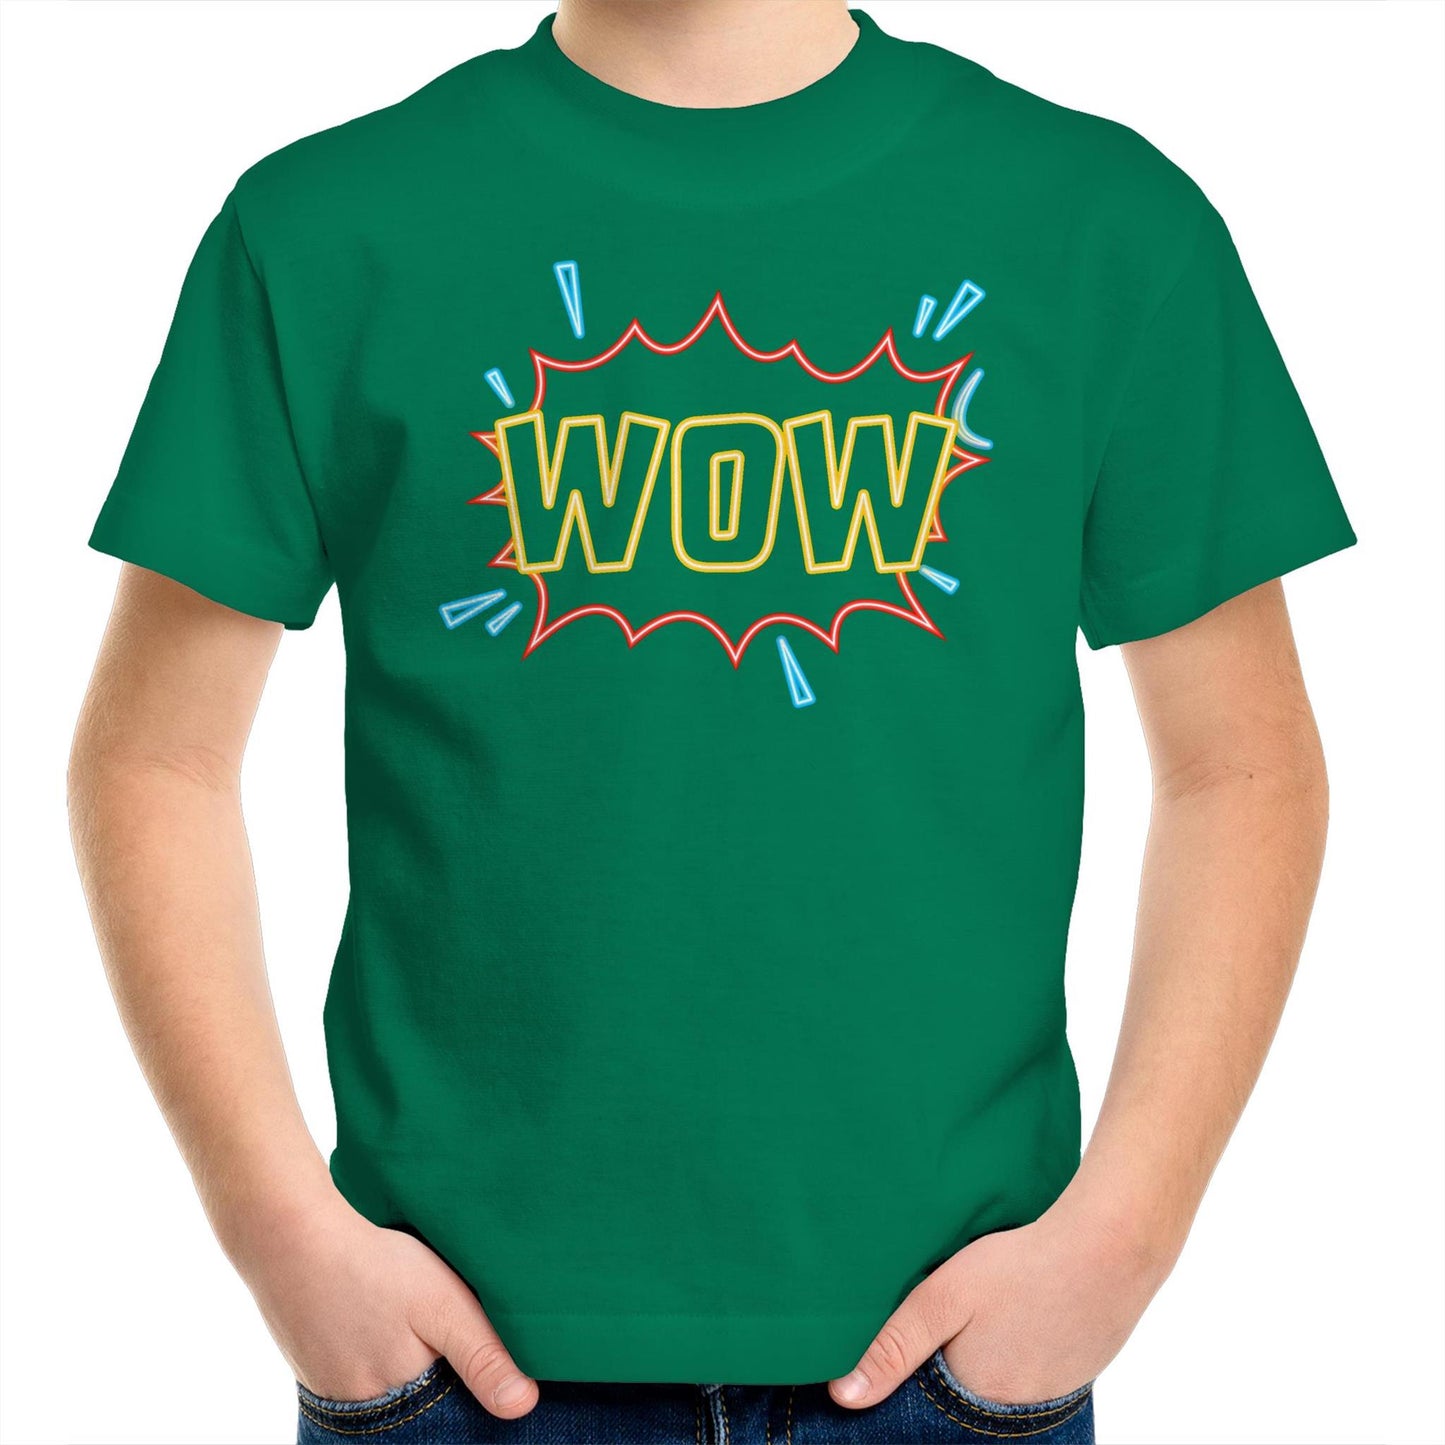 Wow, Comic Book - Kids Youth T-Shirt Kelly Green Kids Youth T-shirt comic